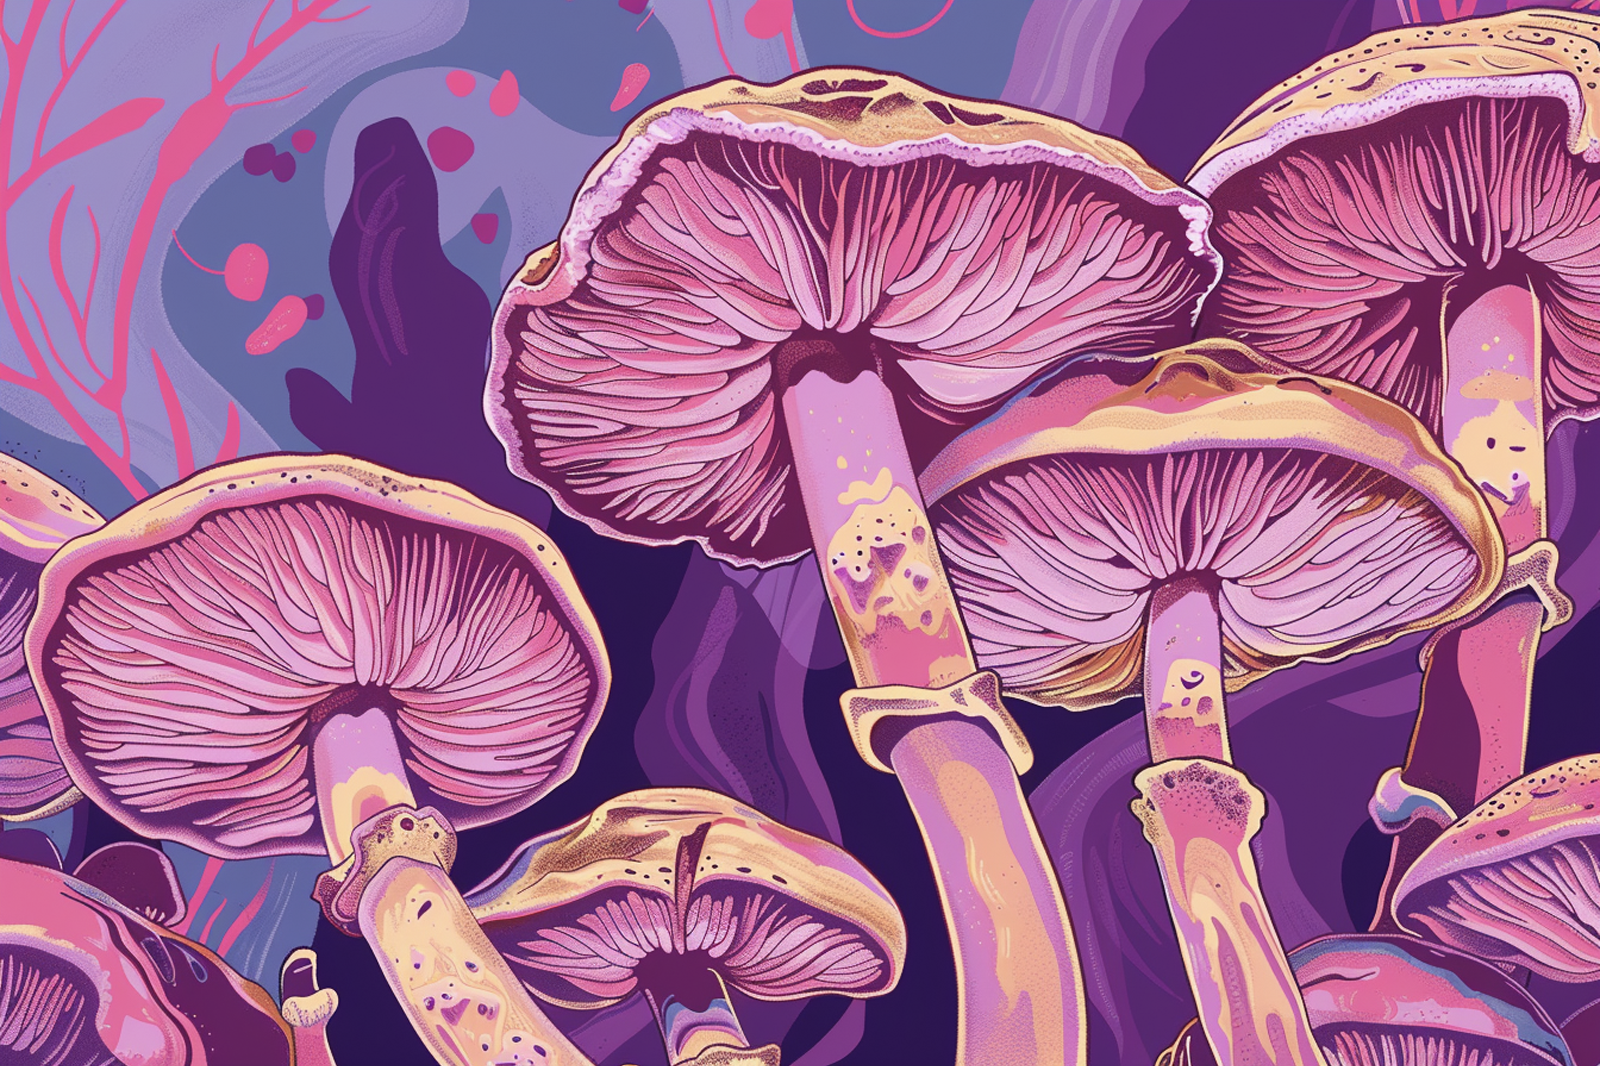 Vibrant purple jungle mushroom amidst lush greenery, evoking fantastical imagery.